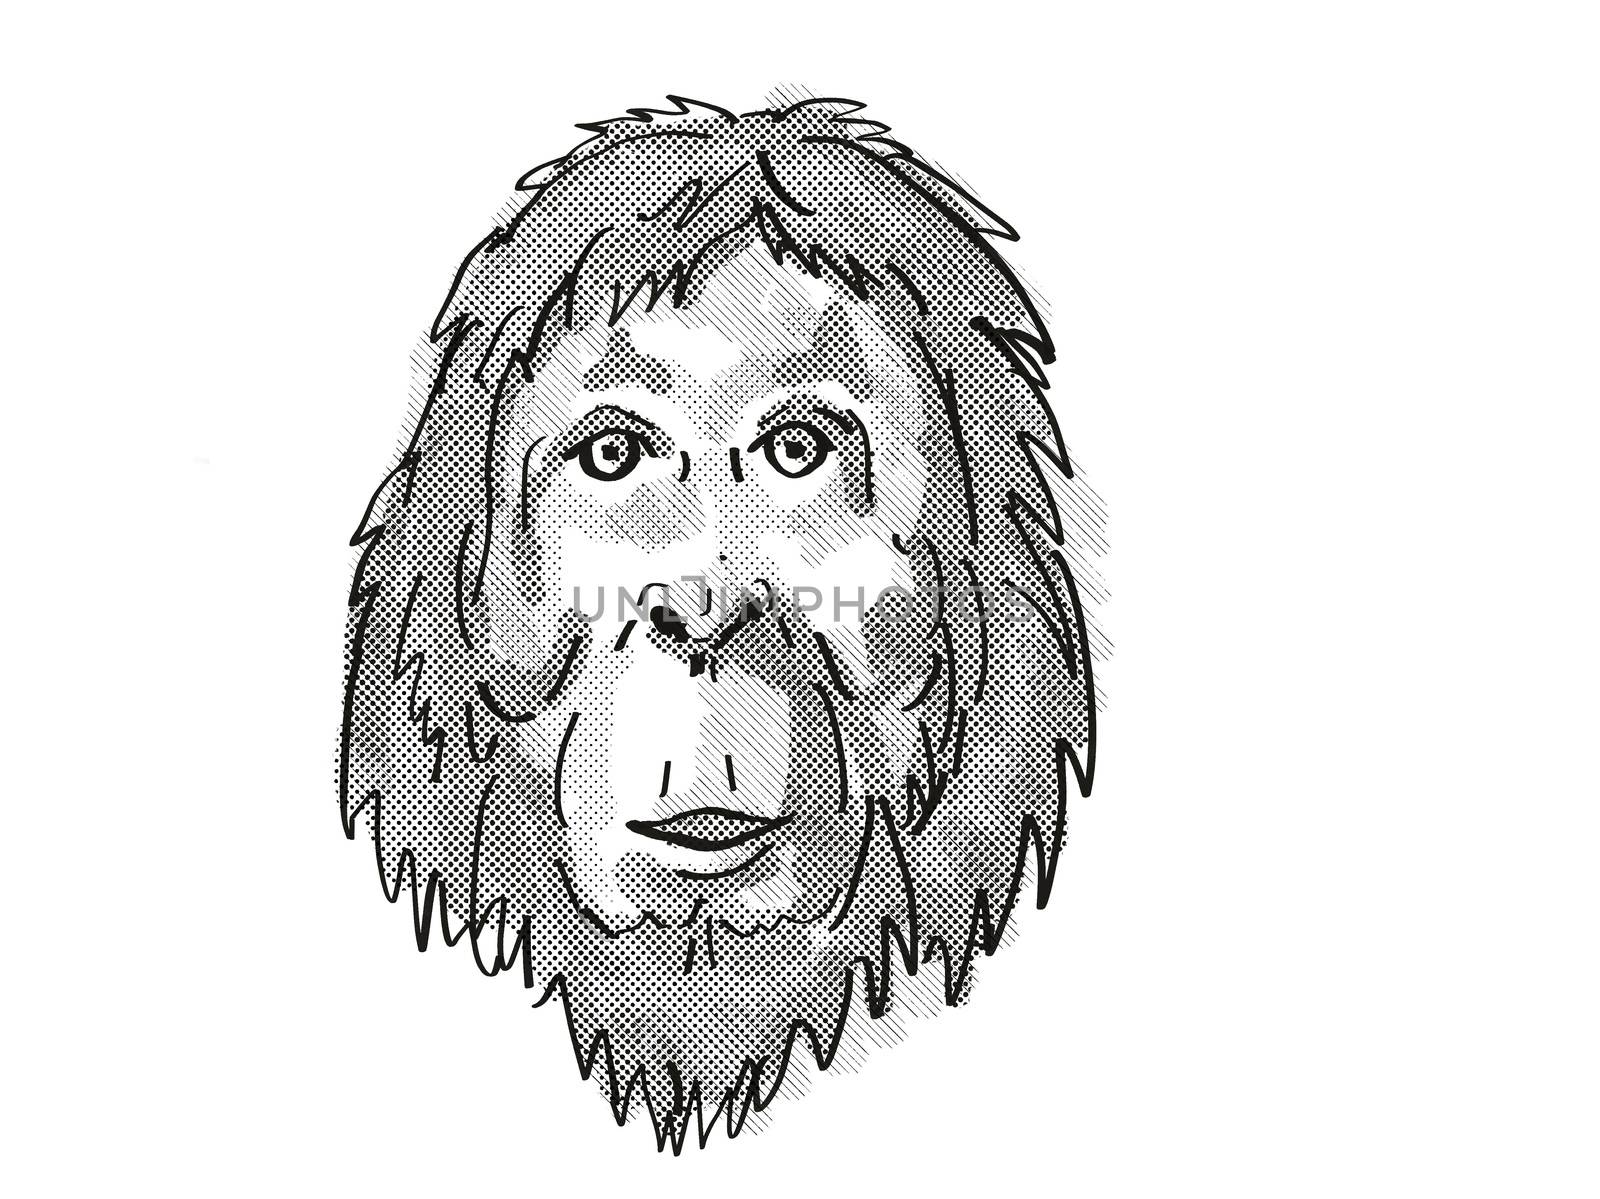 Orangutan Endangered Wildlife Cartoon Retro Drawing by patrimonio